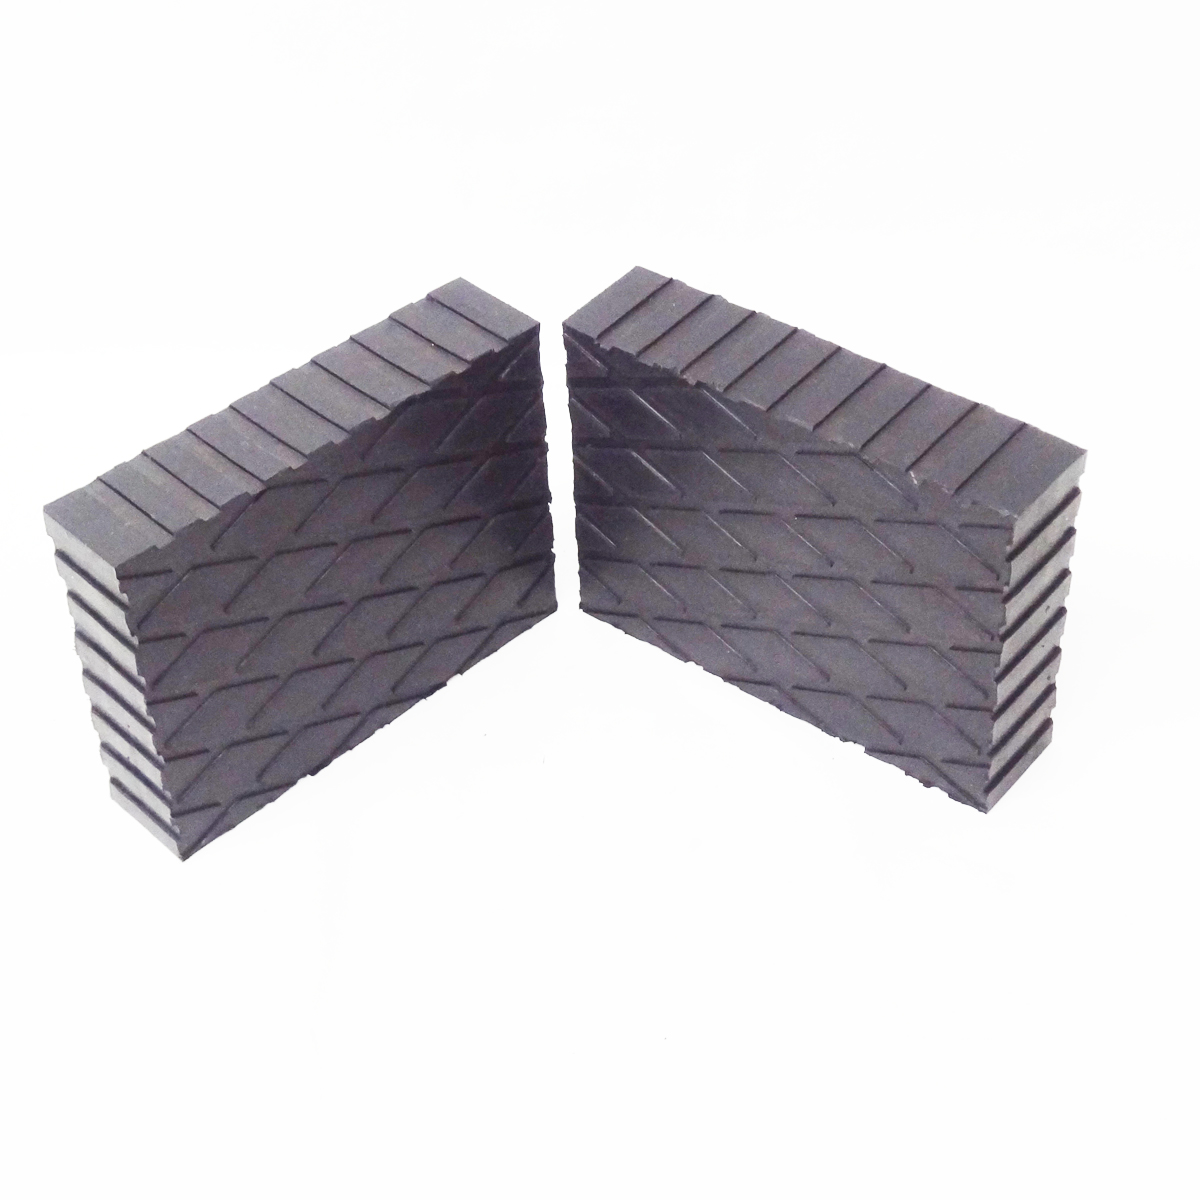 Solid Rubber Lift Block Pad (6 x 4 3/4 x 1.5) Set Of 2